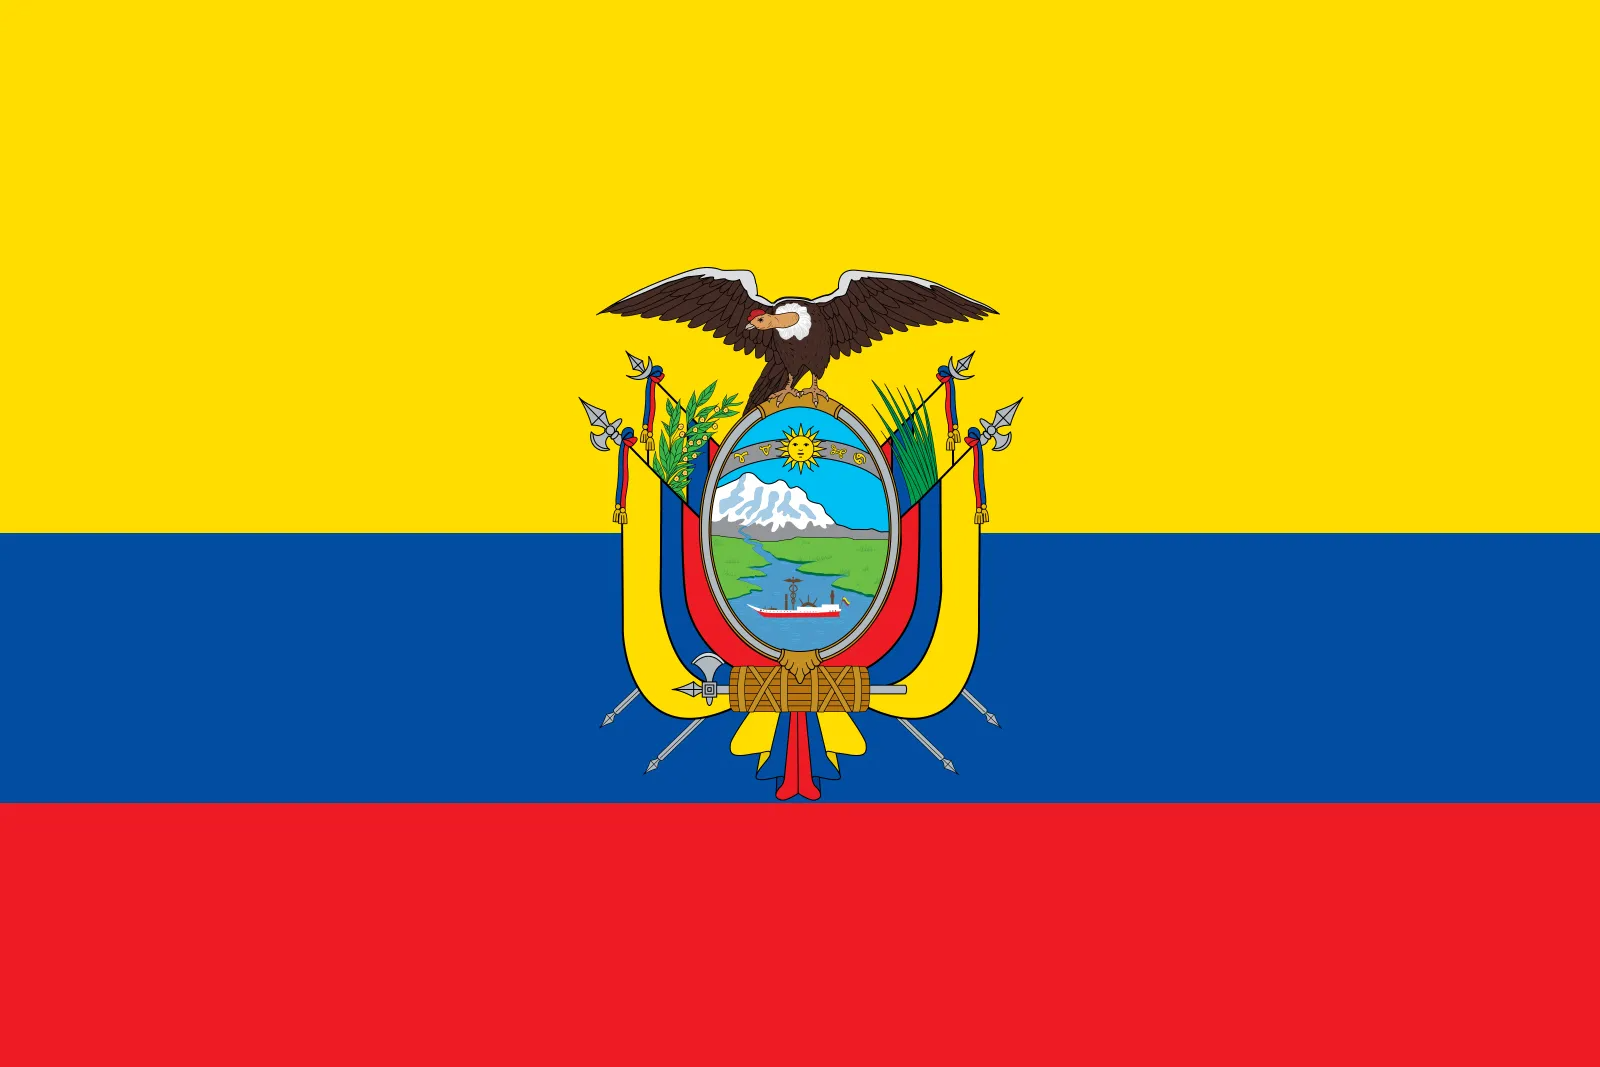 flag-design-similarities-Ecuador-Colombia-flags-Venezuela